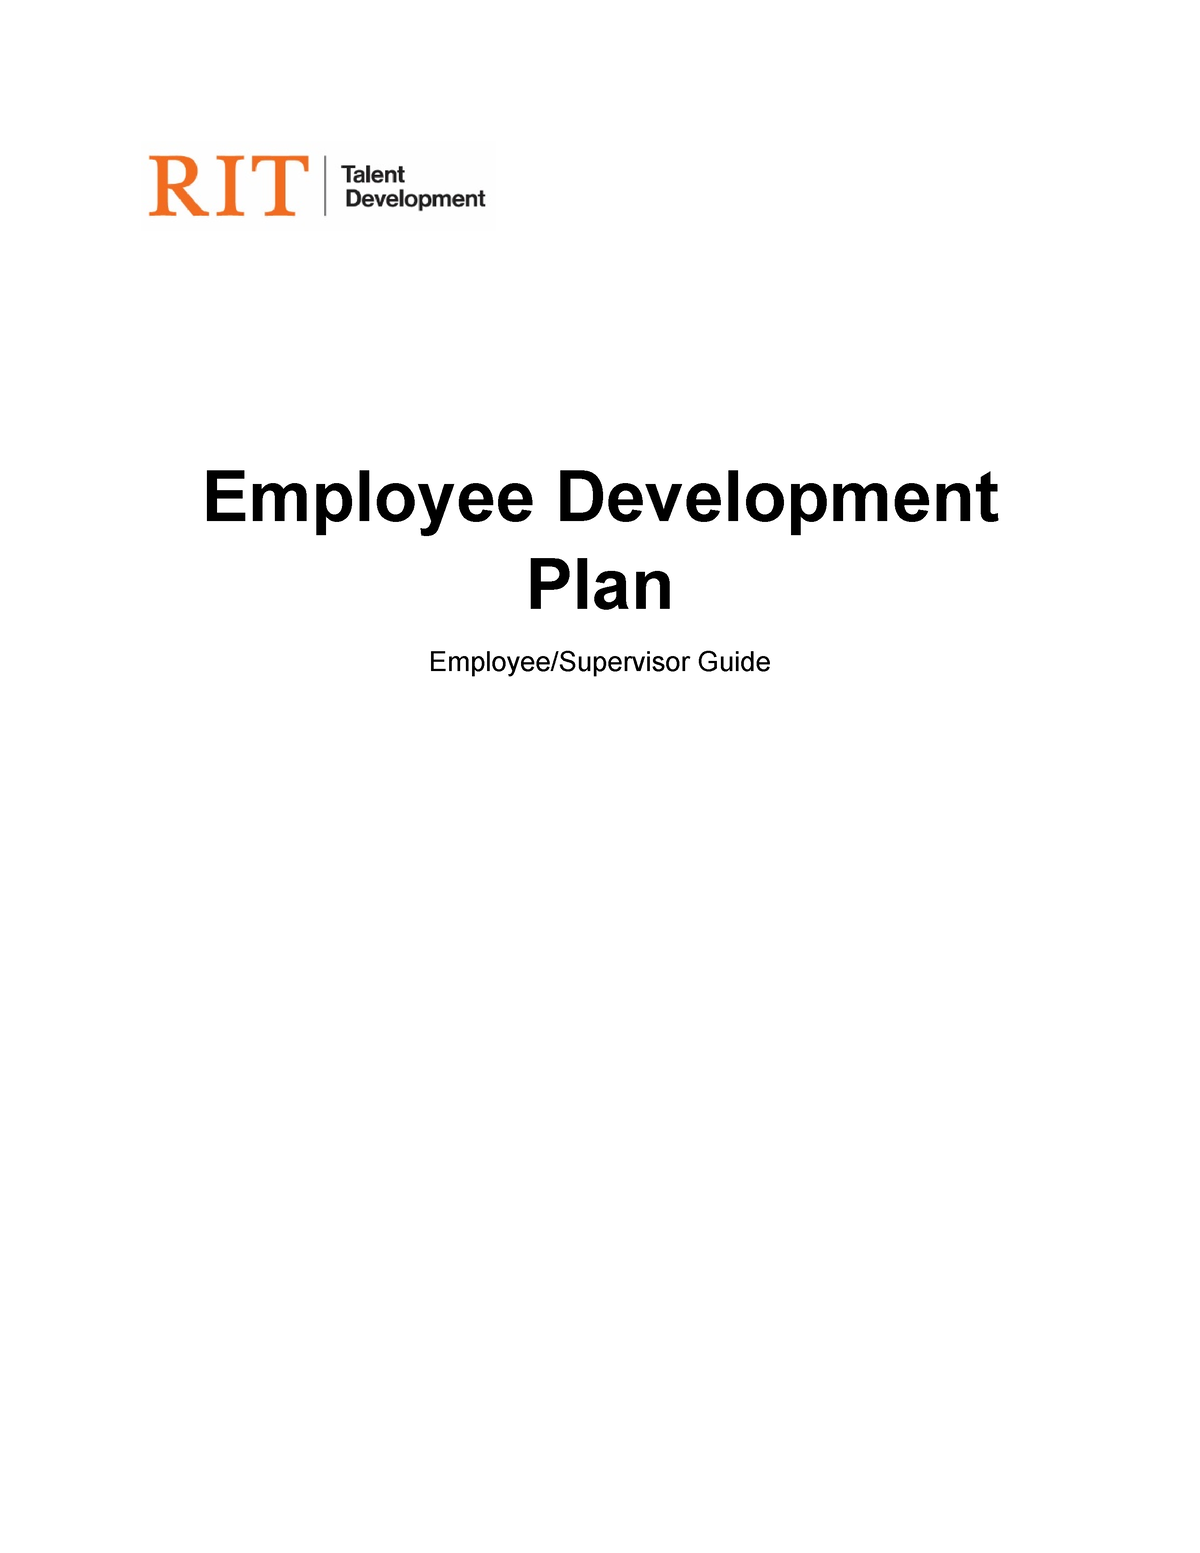 Employee developement plan - Employee Development Plan Employee ...